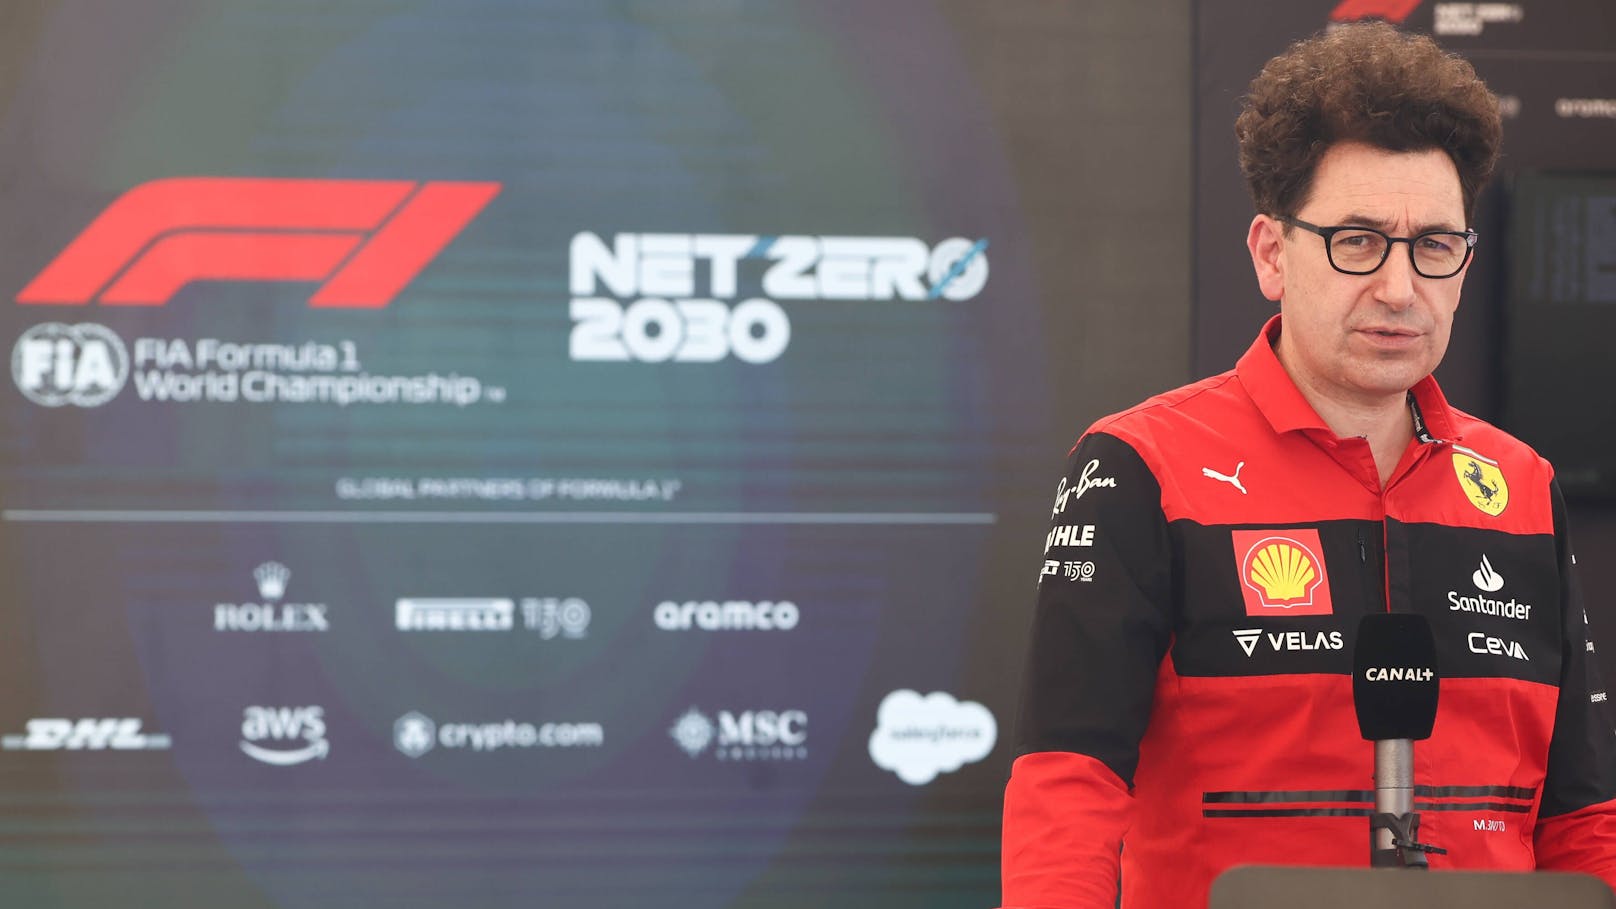 Formel-1-Knall bei Audi: Ex-Ferrari-Teamchef kommt